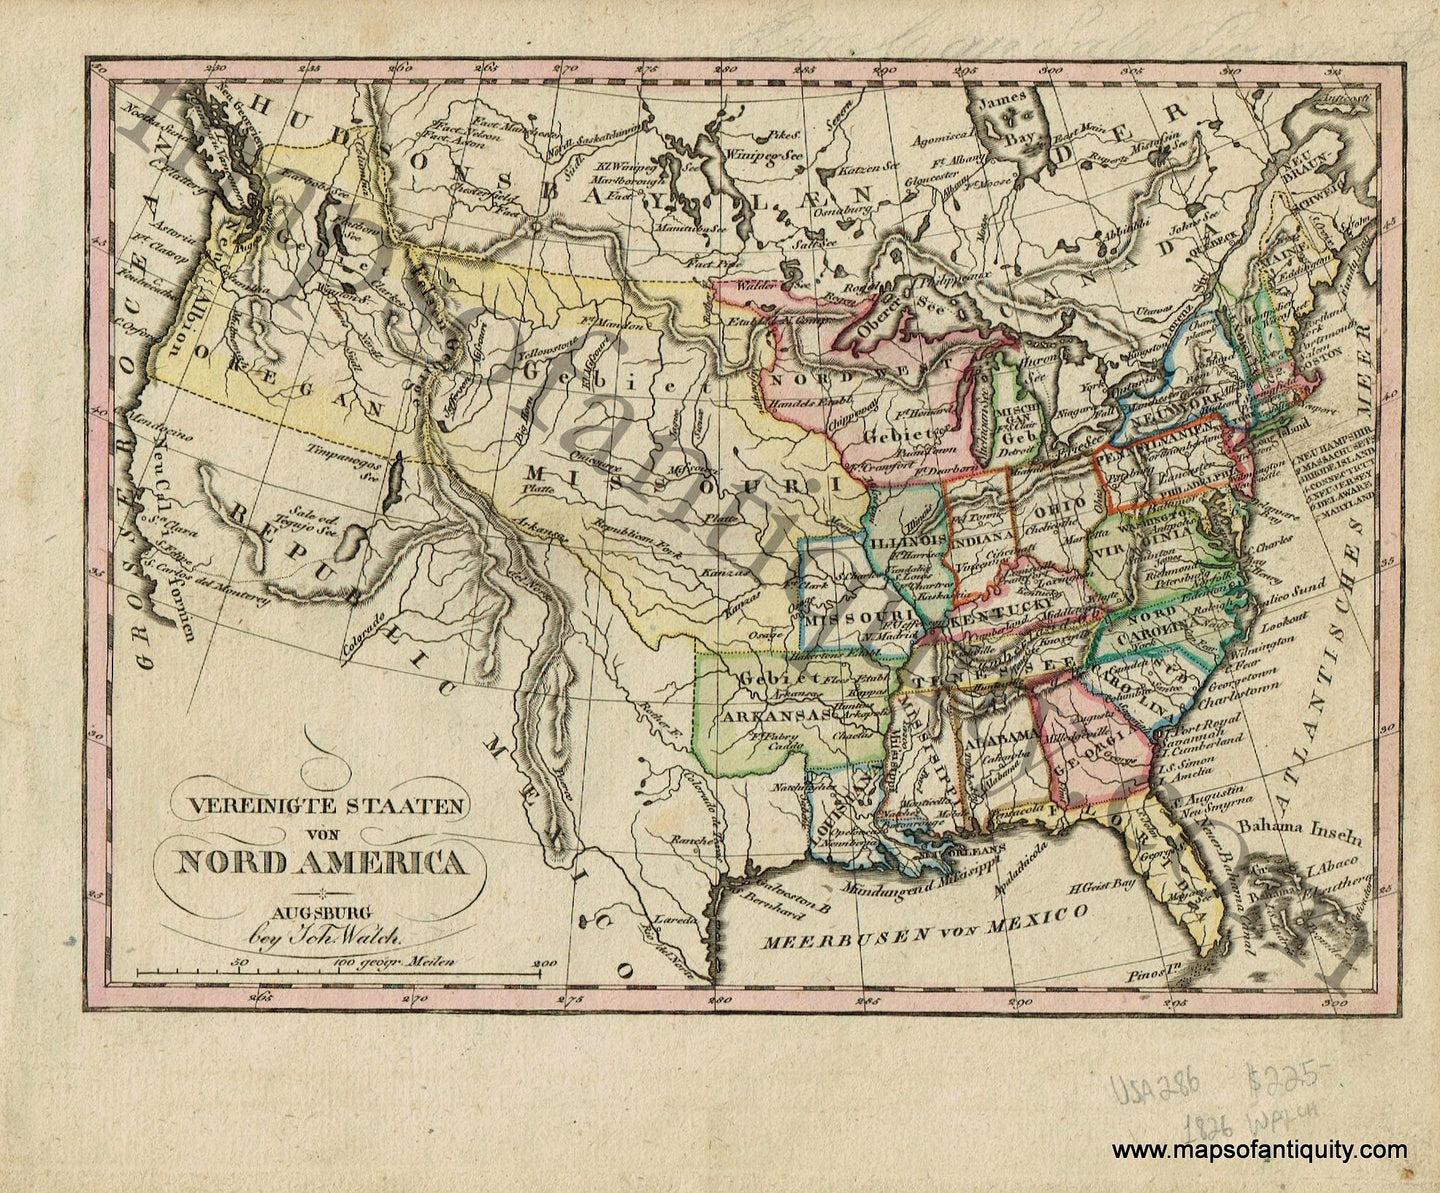 Antique-German-Vereinigte-Staaten-von-Nord-America-United-States-USA-U.S.-Walch-Neuester-Schul-Atlass-1826-1820s-Early-19th-Century-Maps-of-Antiquity